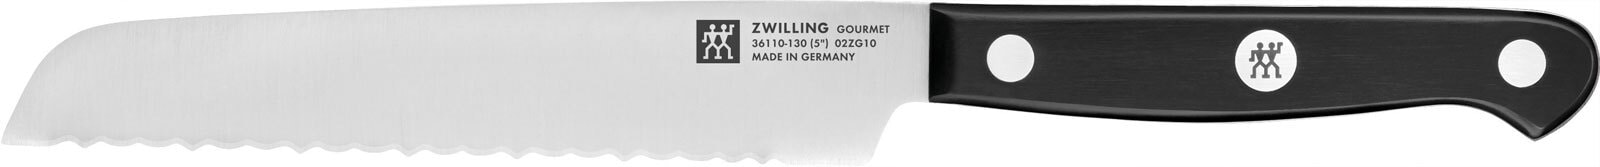 ZWILLING Messerblock GOURMET 7-teilig Holz/Metall